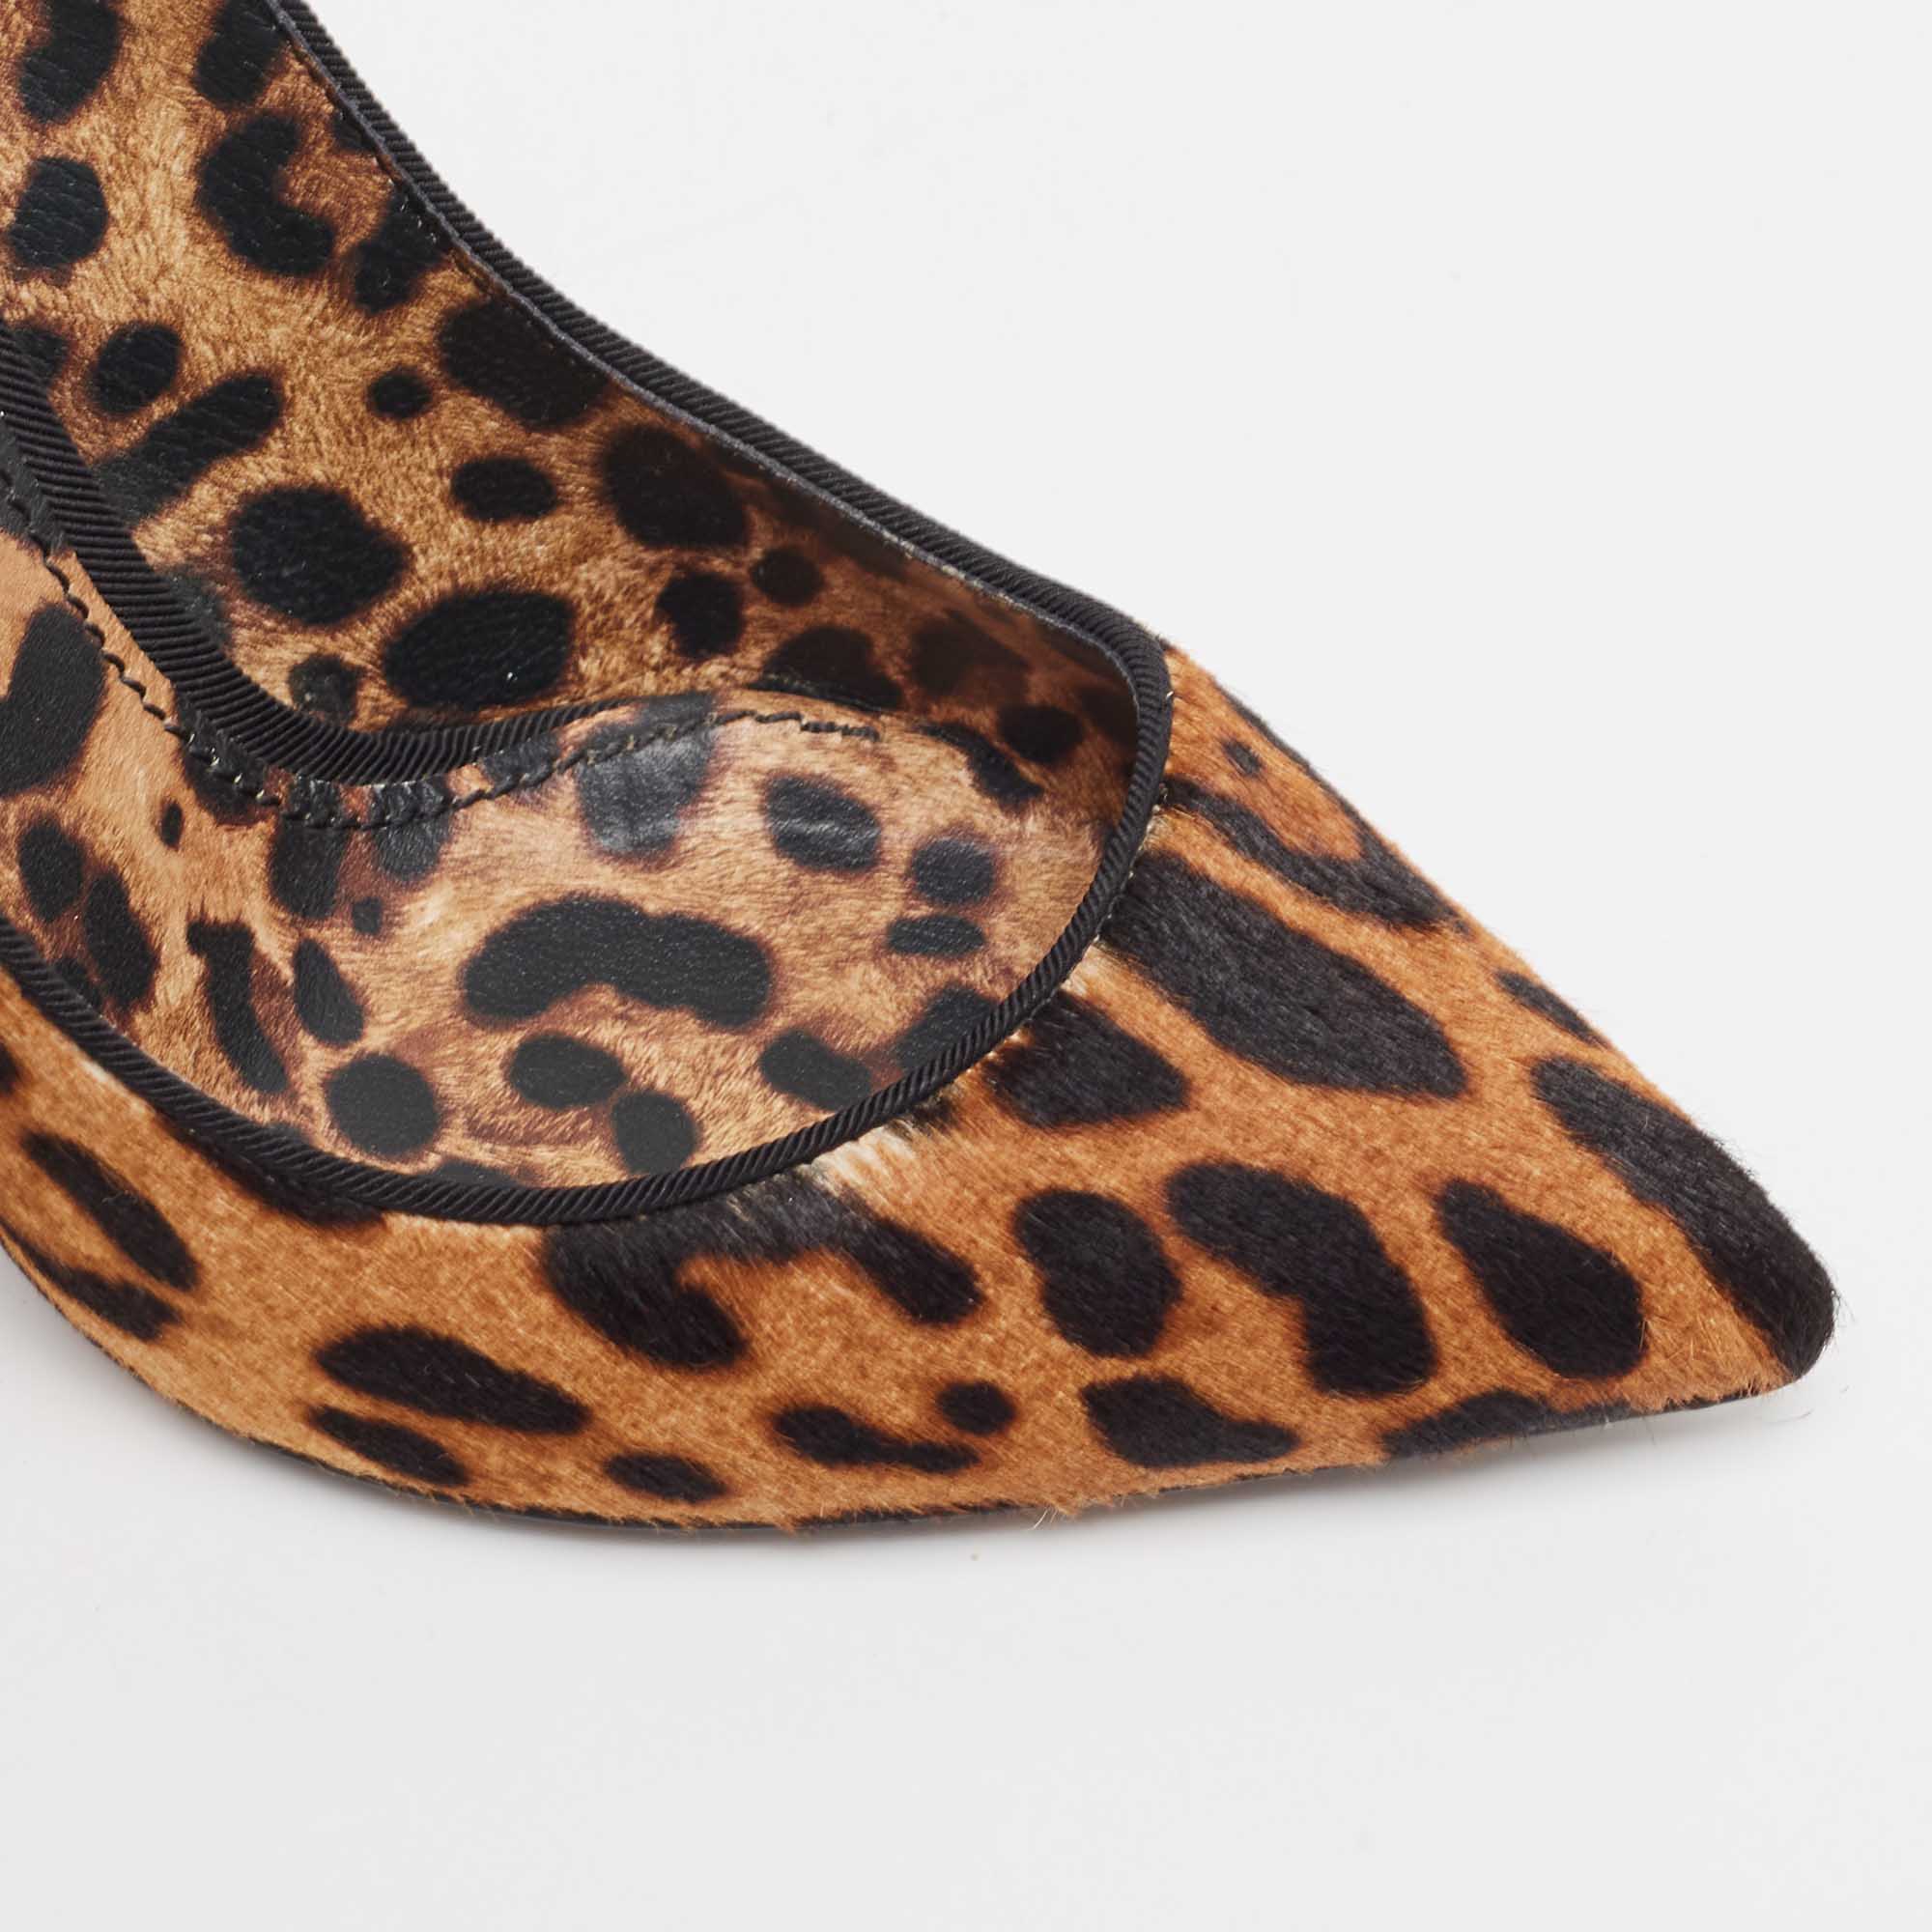 Dolce & Gabbana Leopard Calf Hair Pointed Toe Pumps Size 36.5